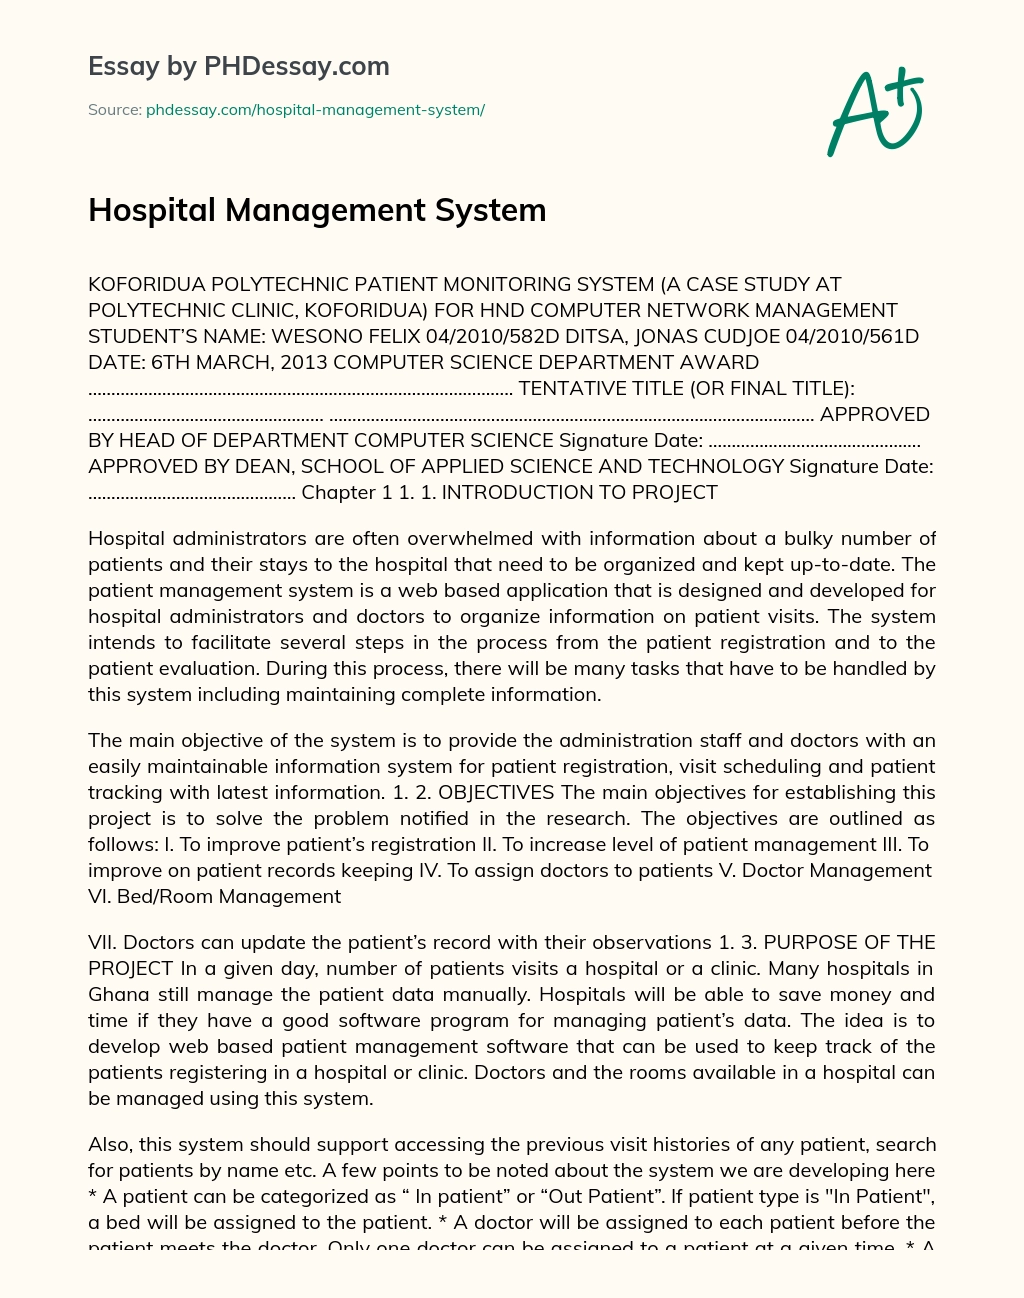 Hospital Management System essay